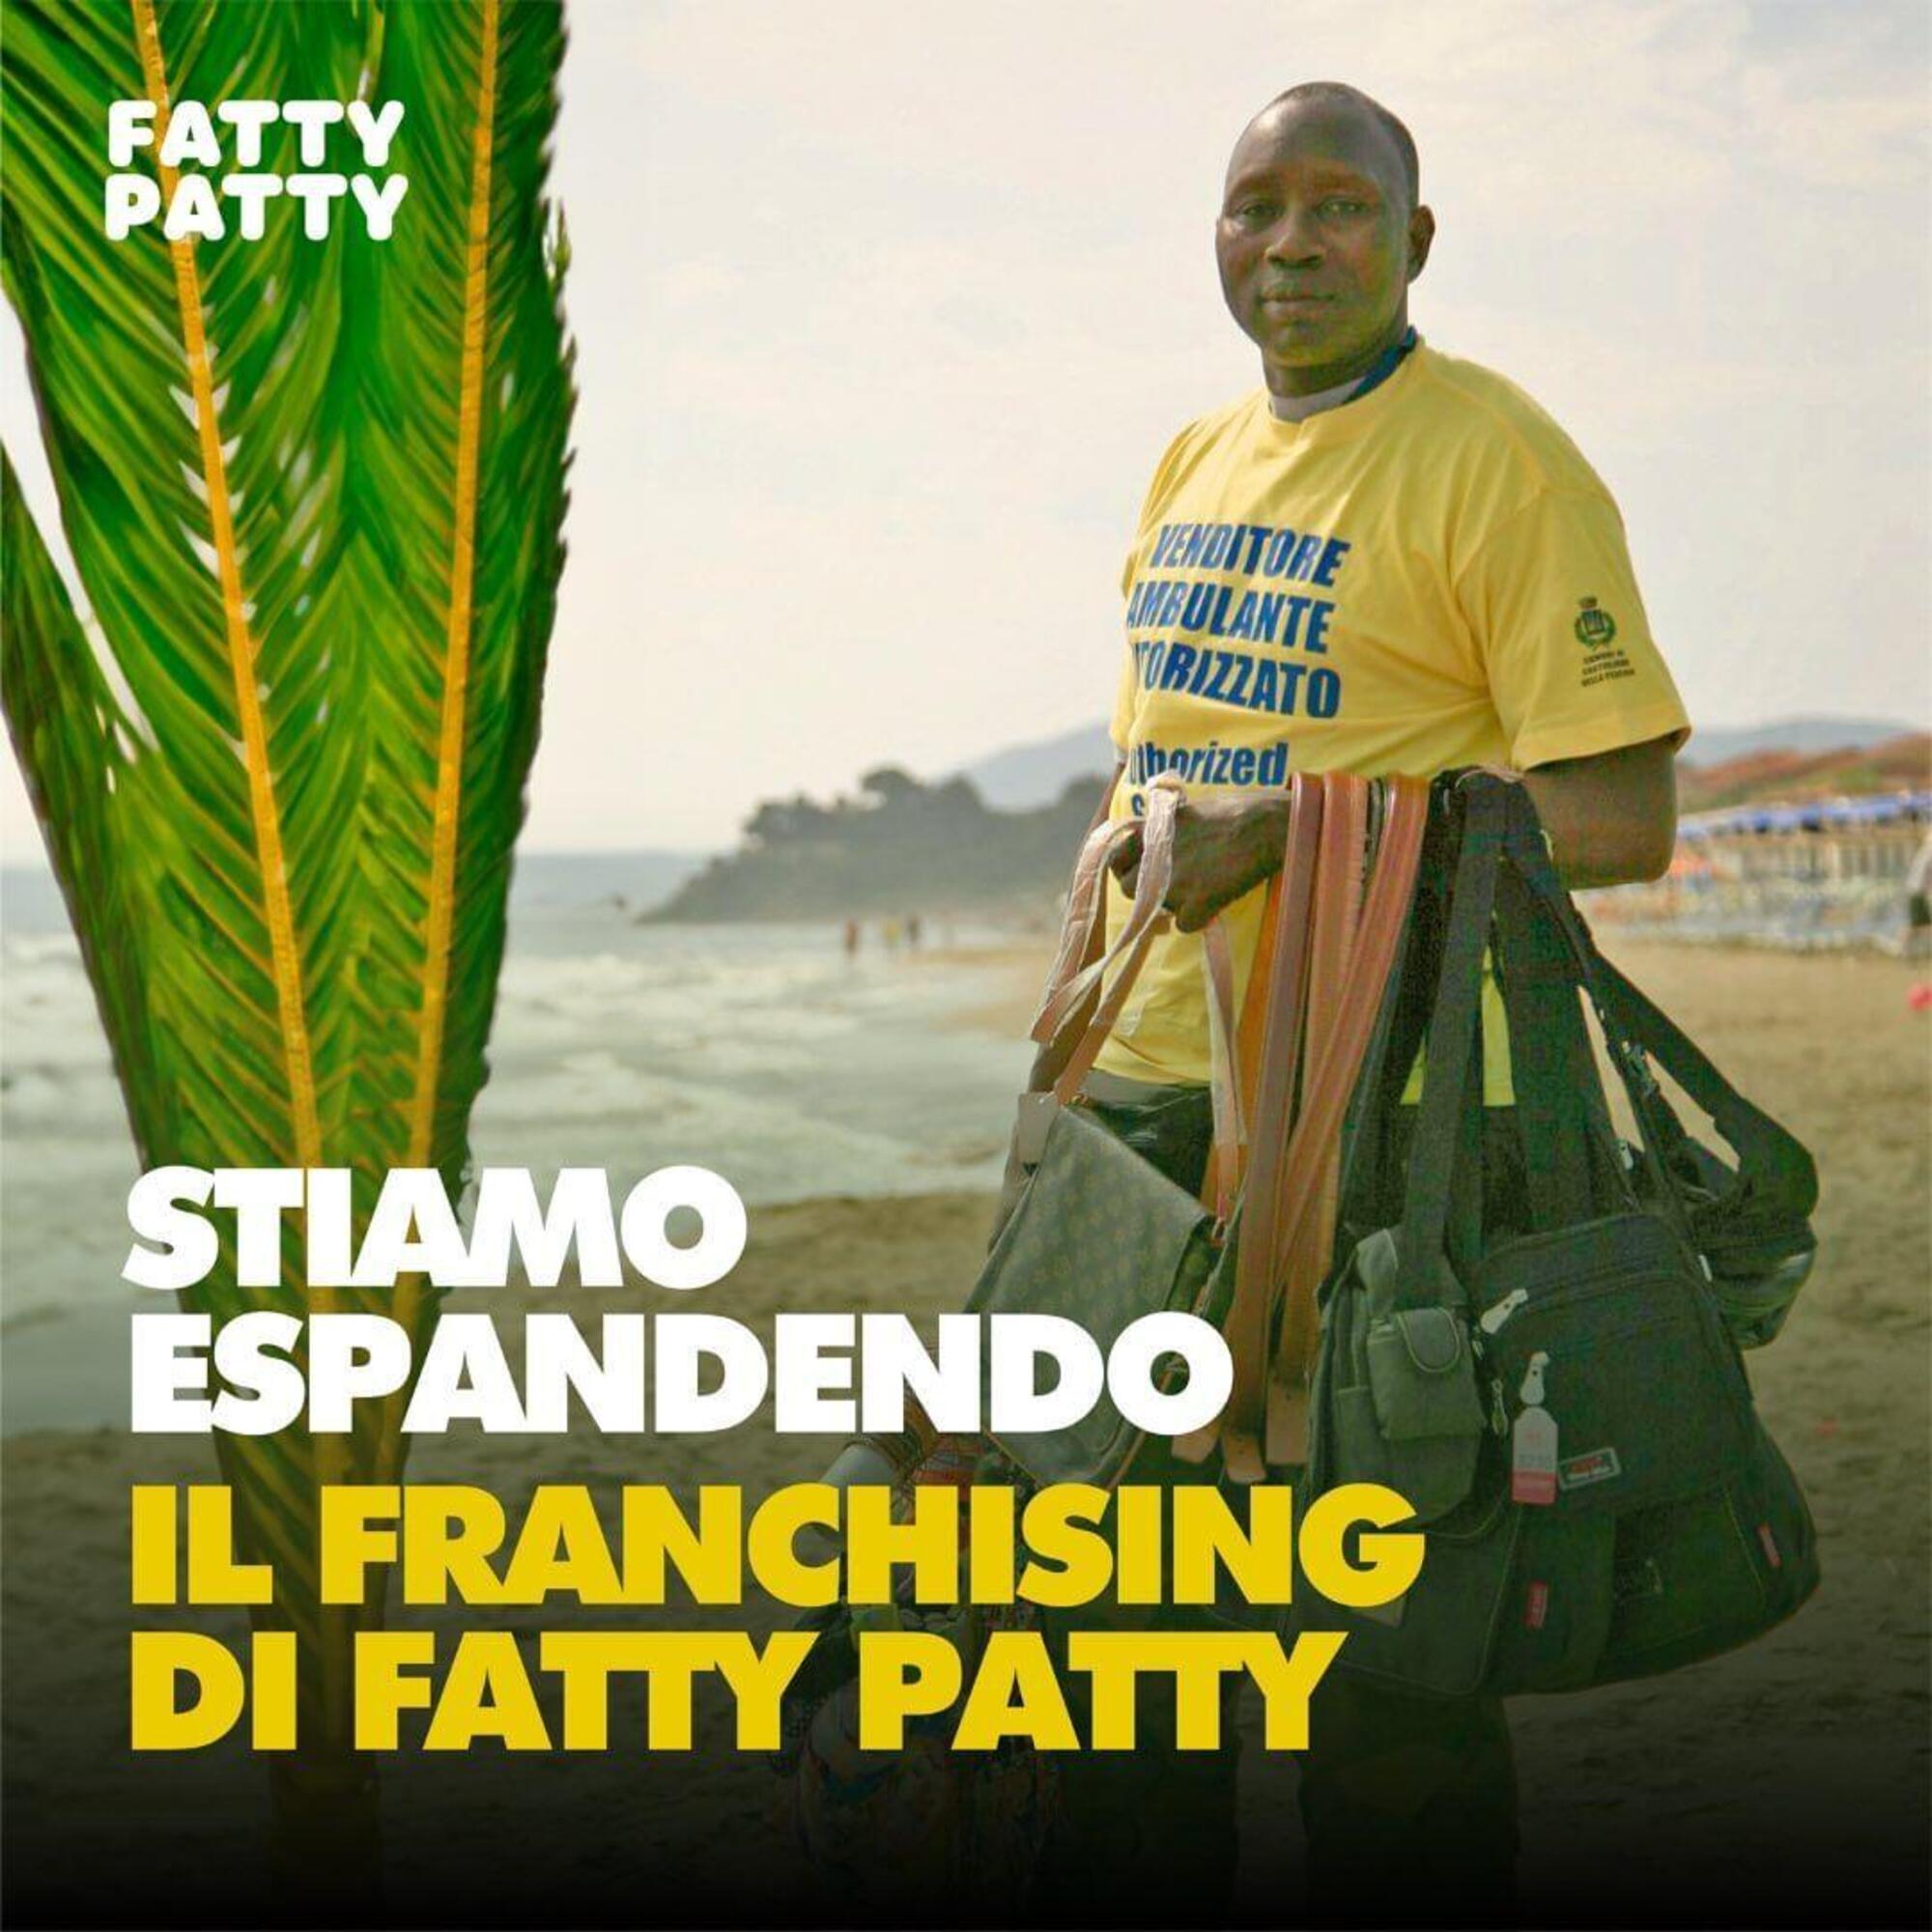 La campagna choc di Fatty Patty